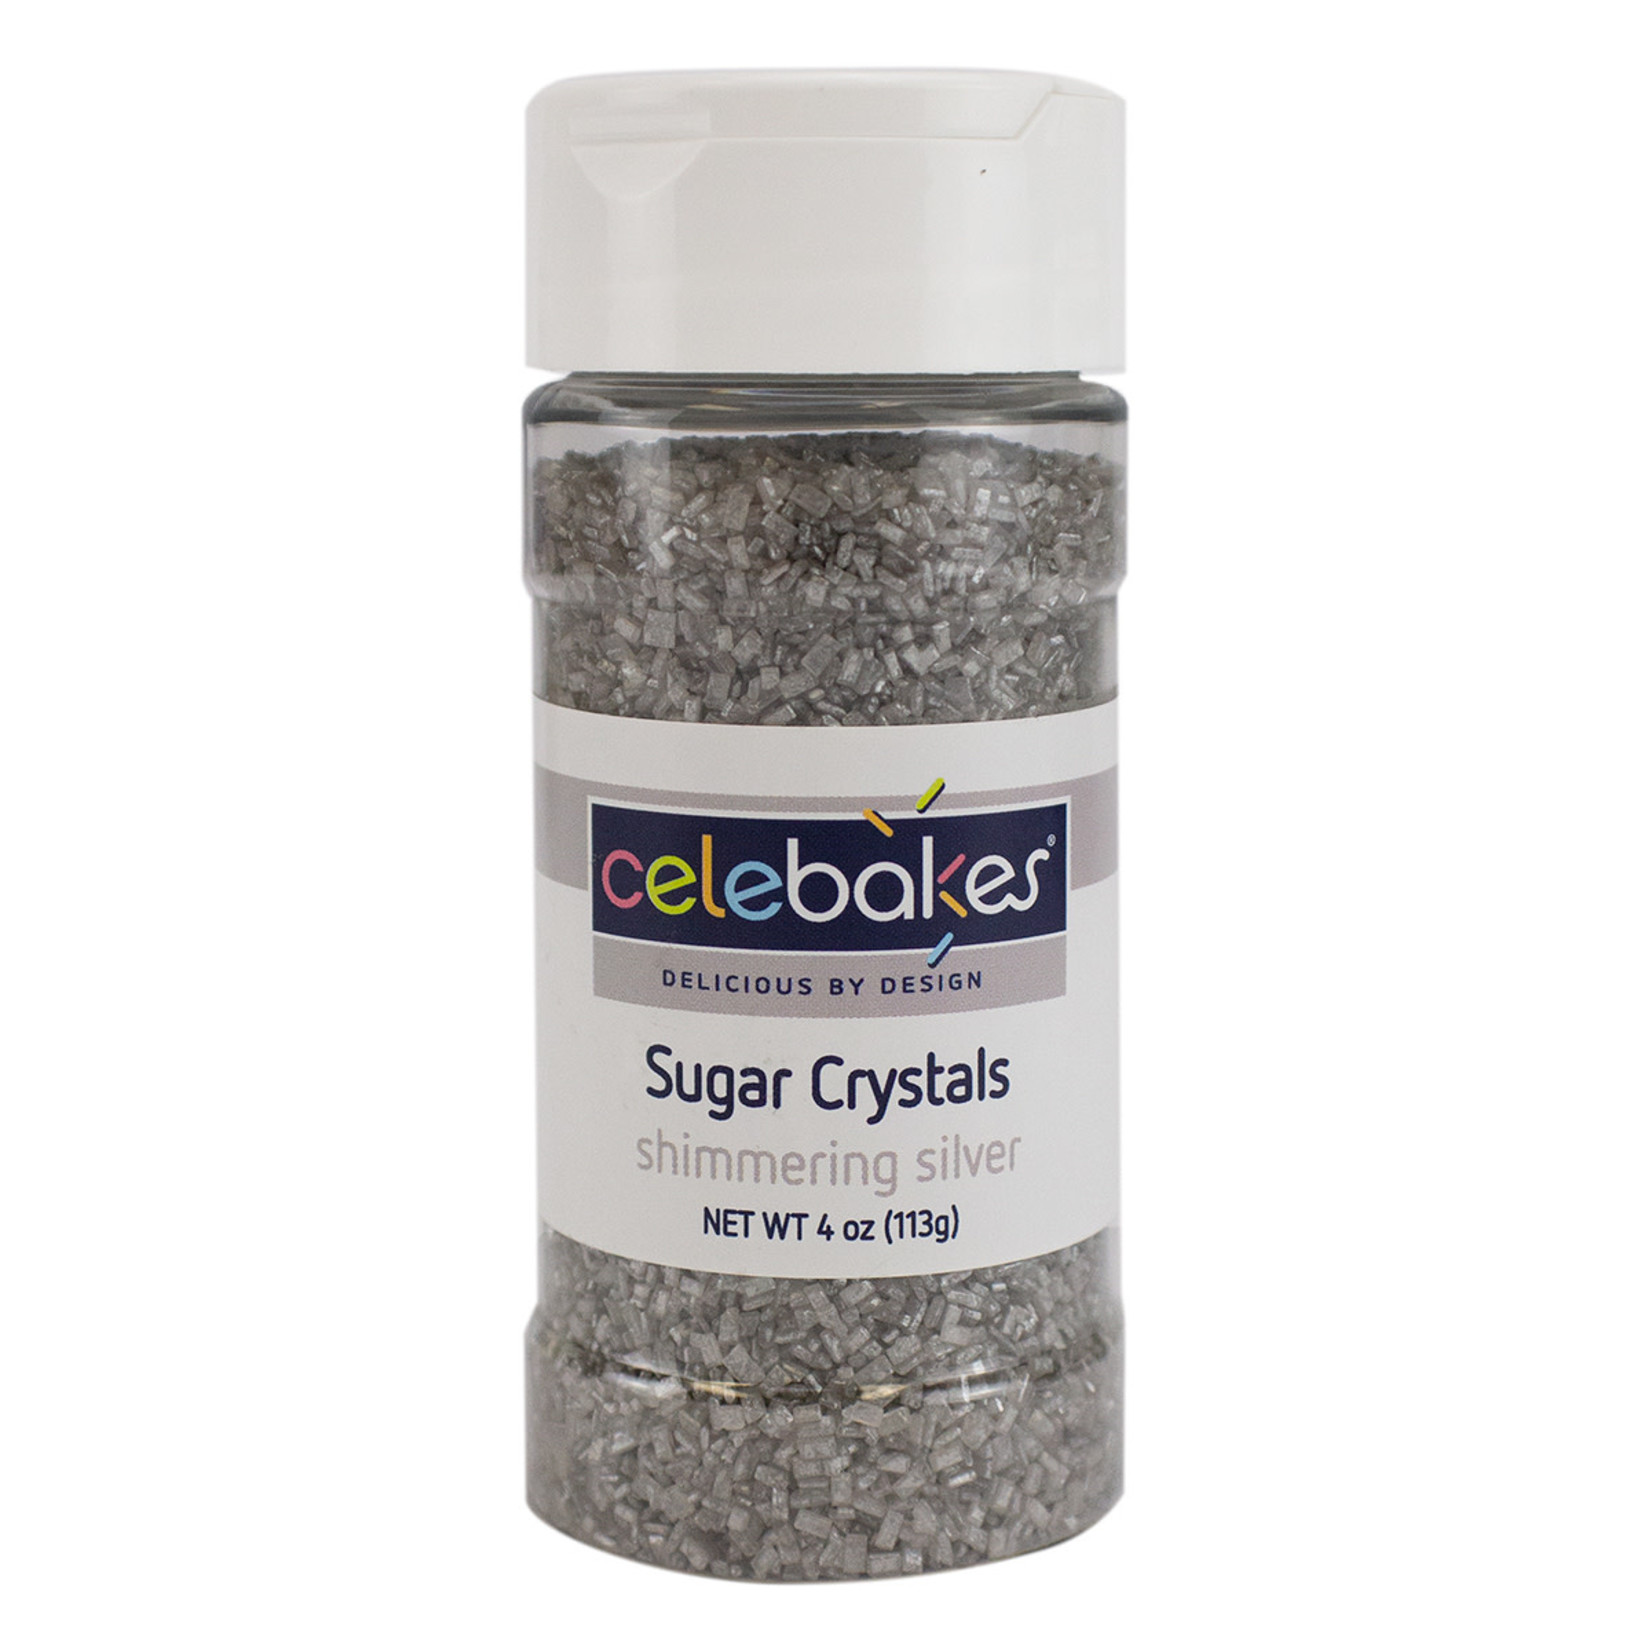 TWS Celebakes Shimmering Silver Sugar Crystals, 4 oz.